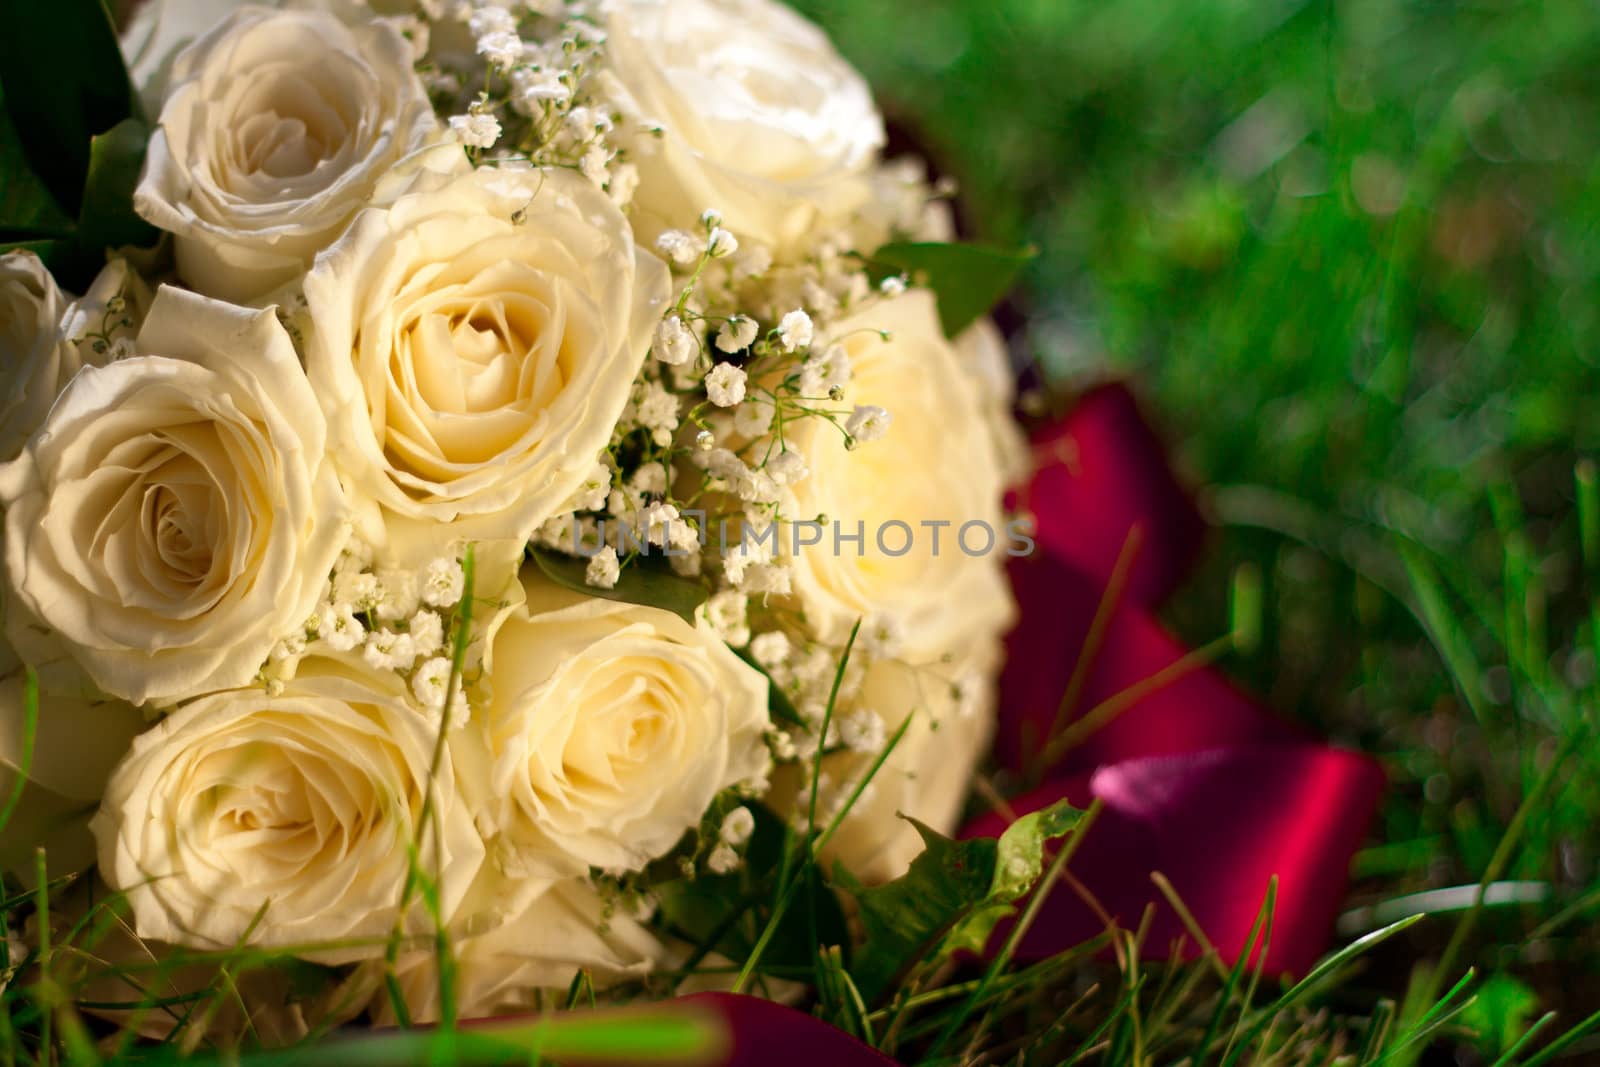 Wedding bouquet lies in the grass by victosha